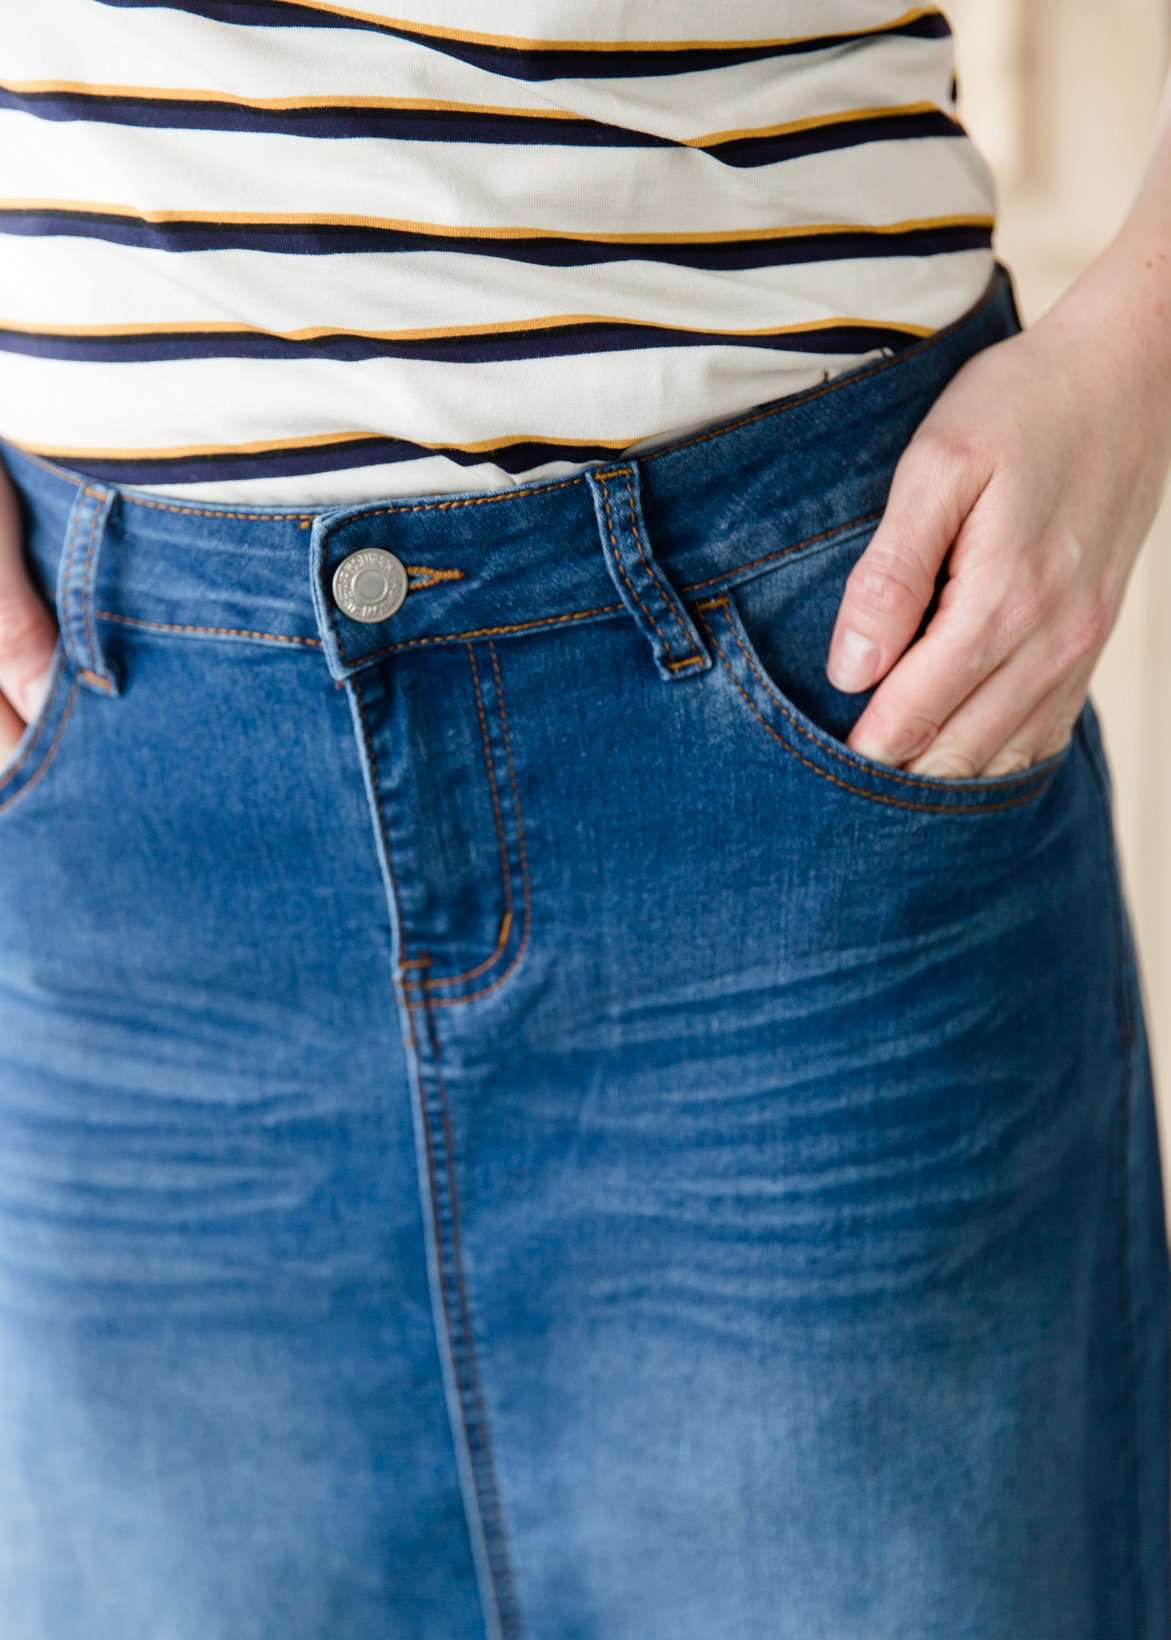 Modest long denim jean skirt with pocket details